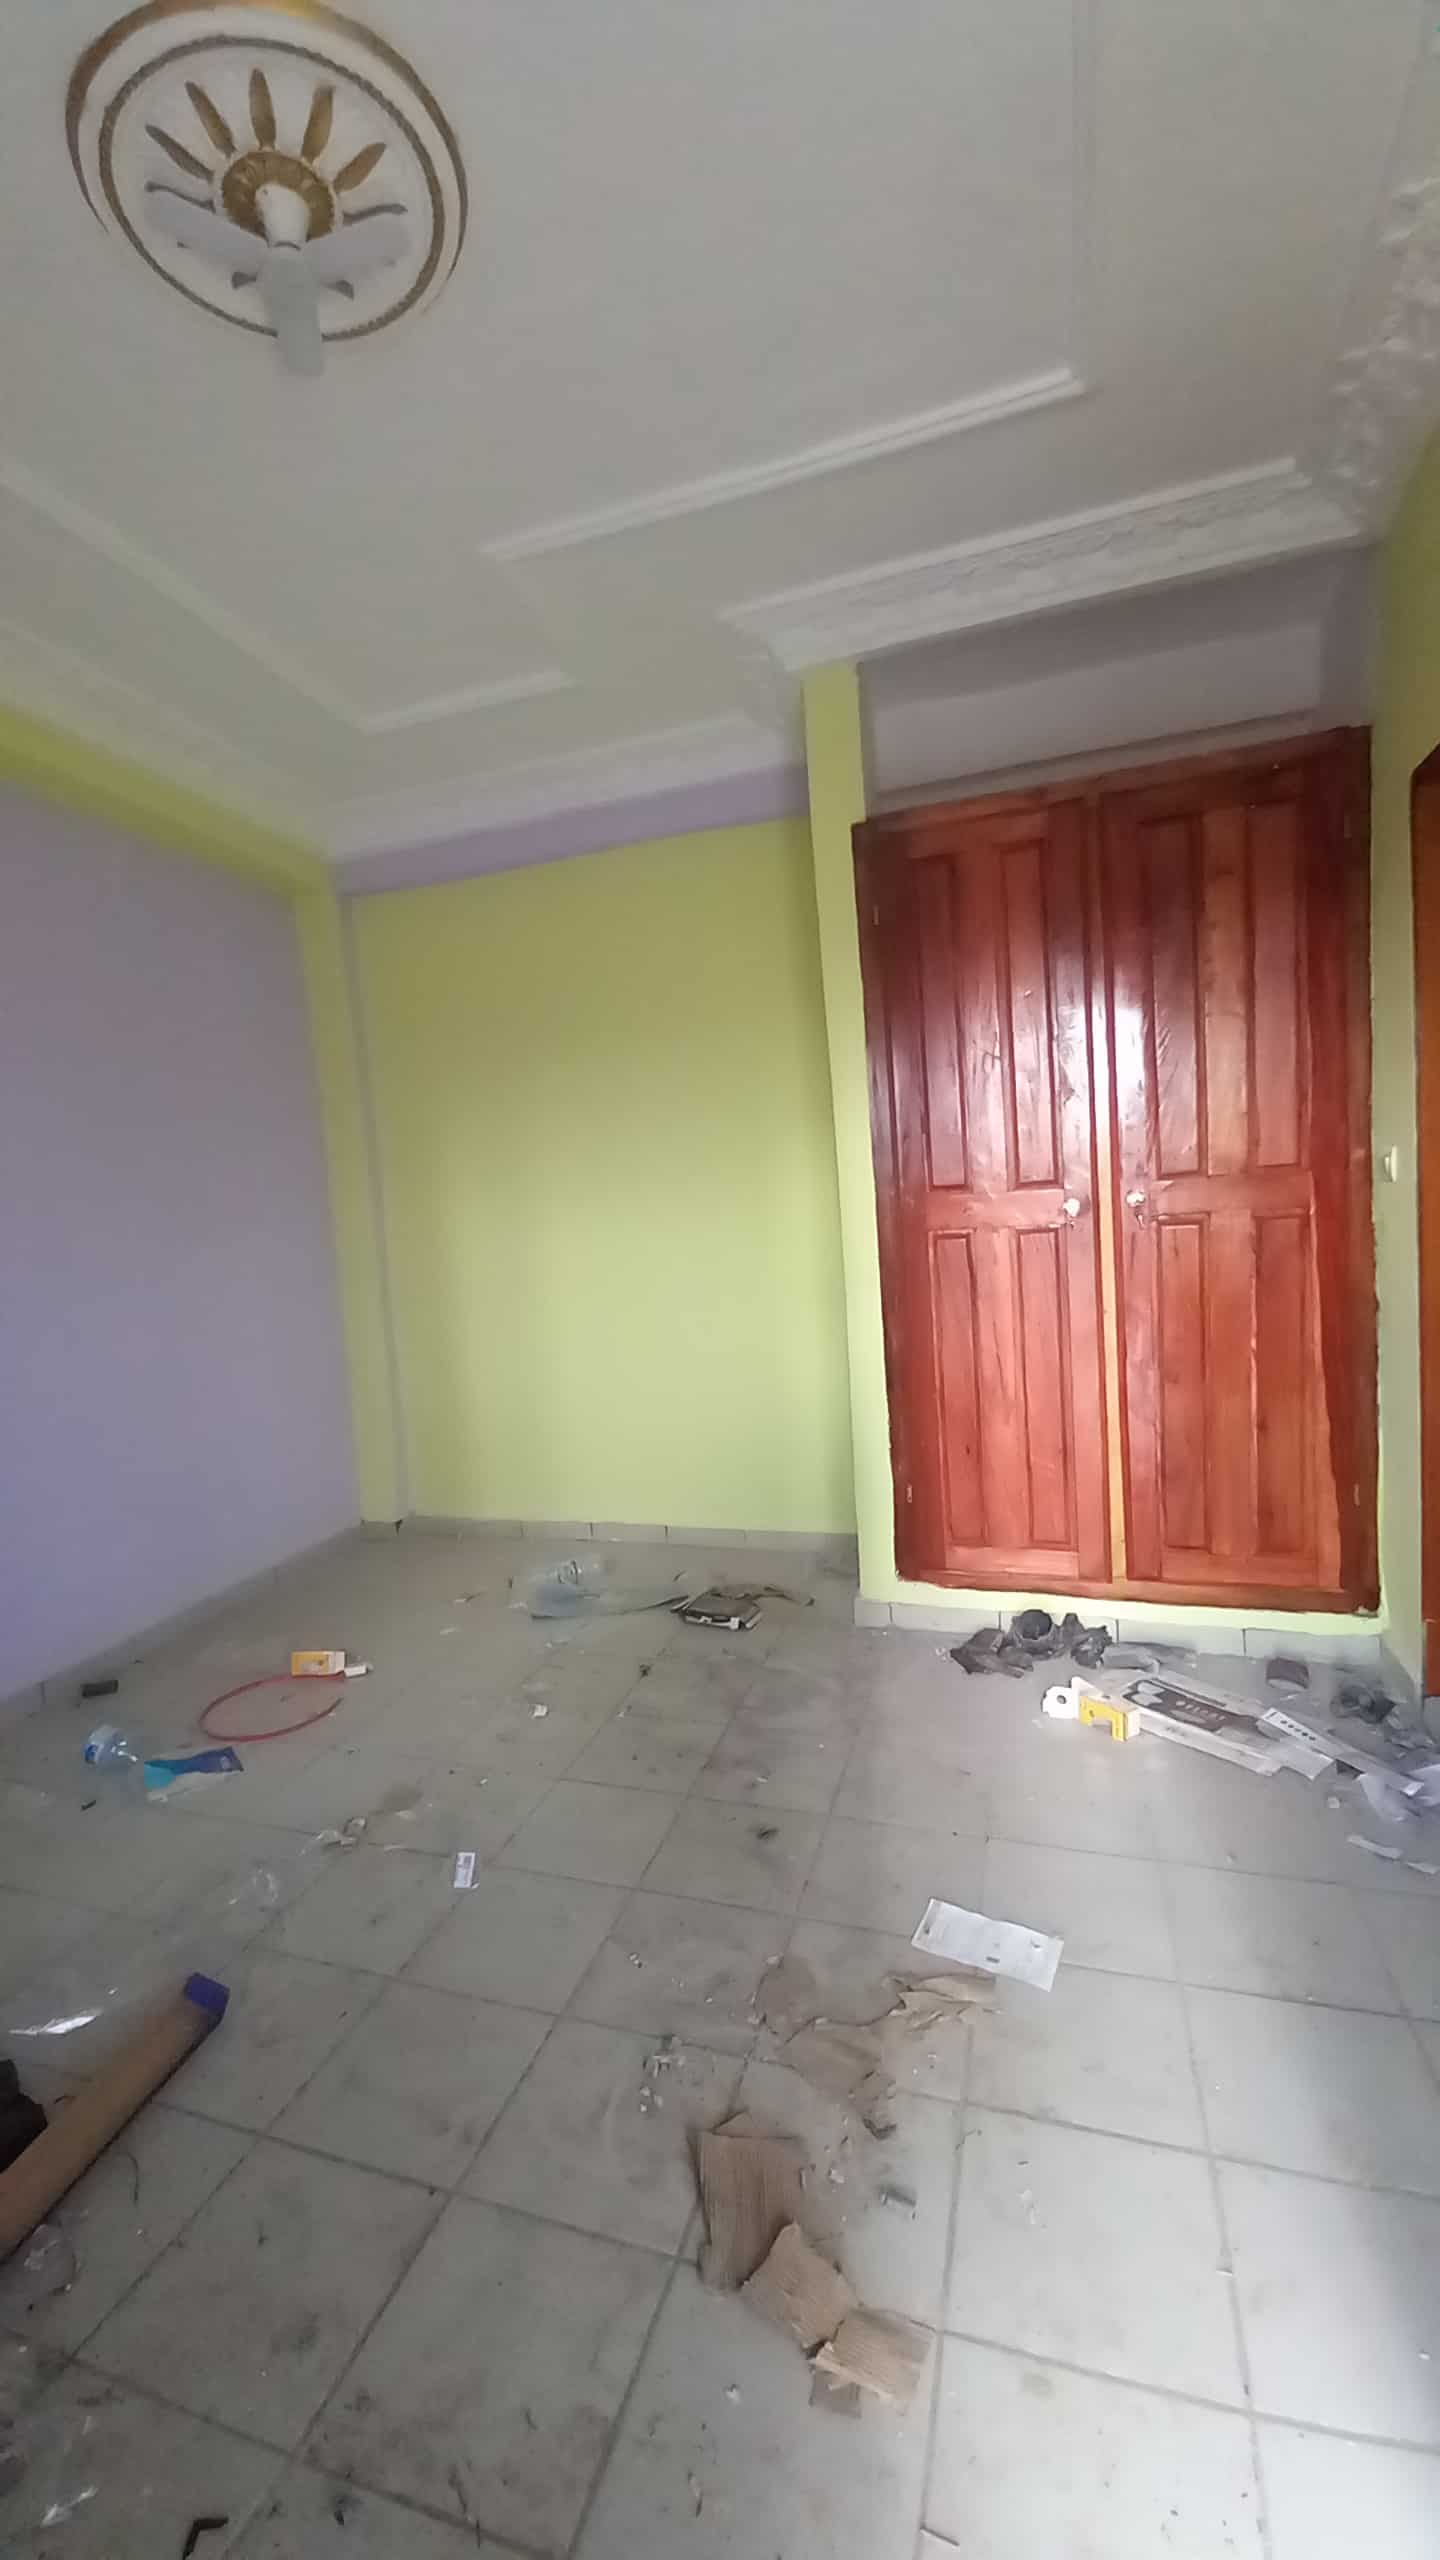 Chambre à louer - Yaoundé, Ngousso, Fugerol - 40 000 FCFA / mois